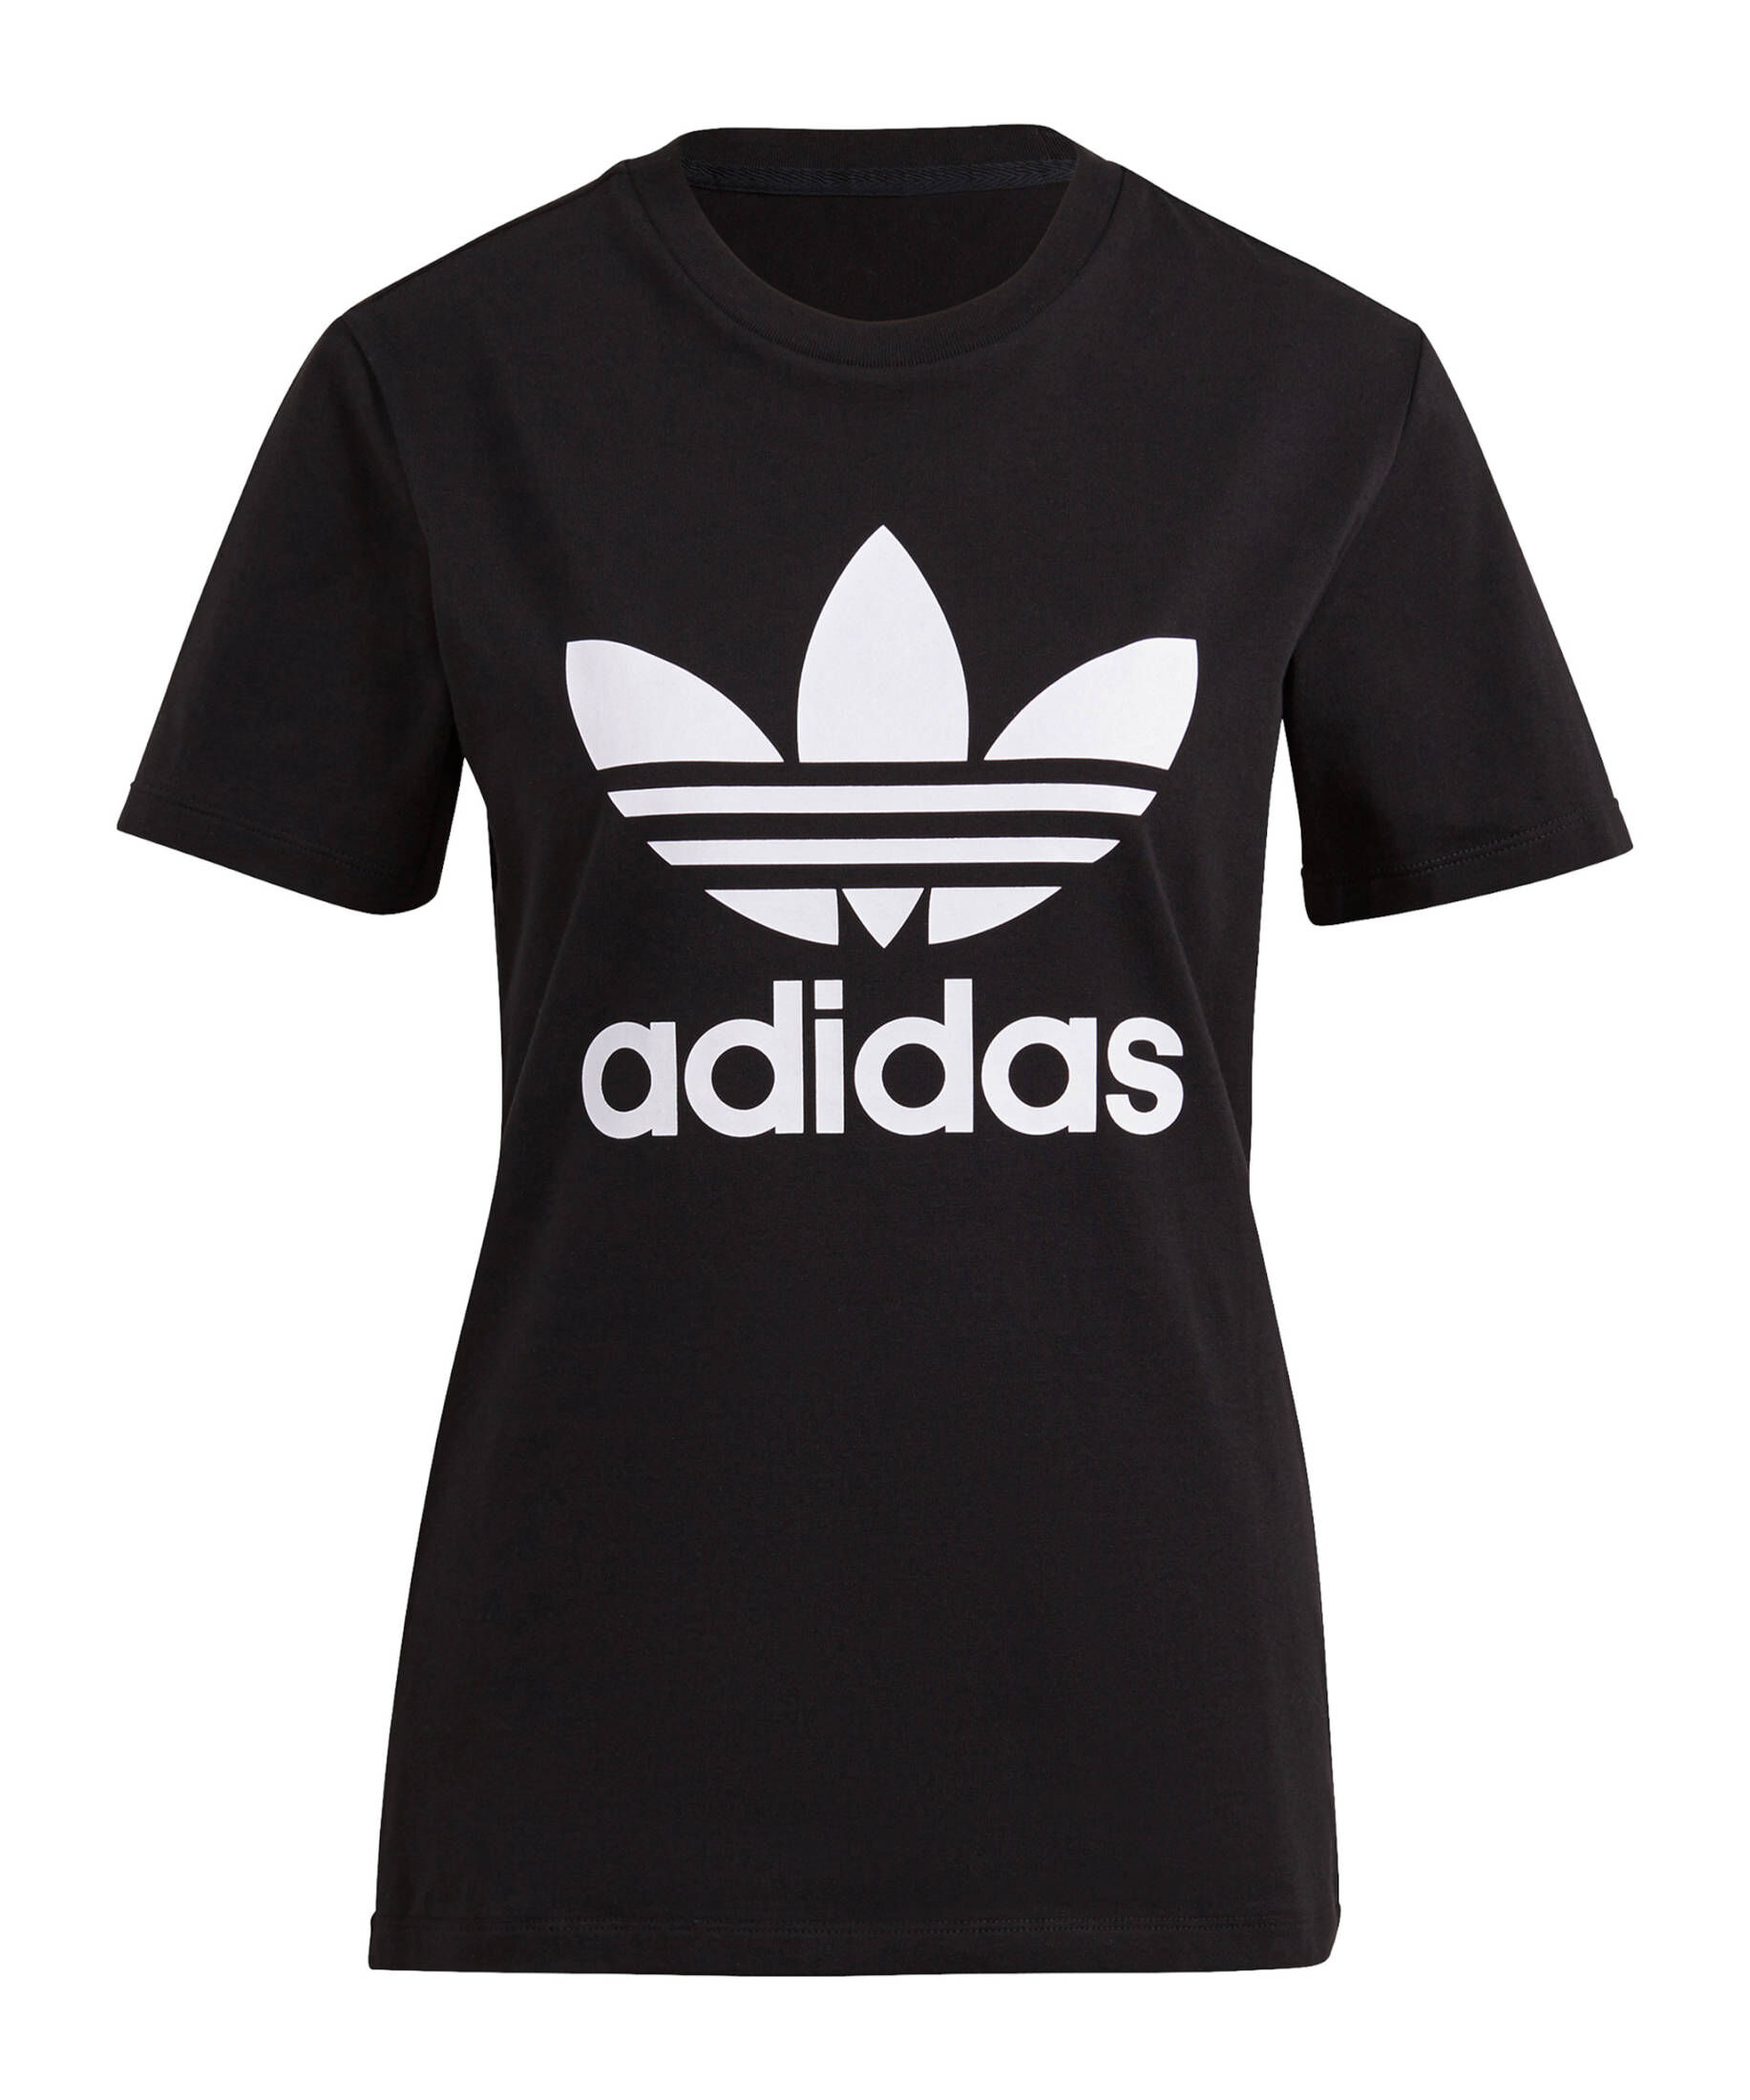 adidas Originals| Damen T-Shirt